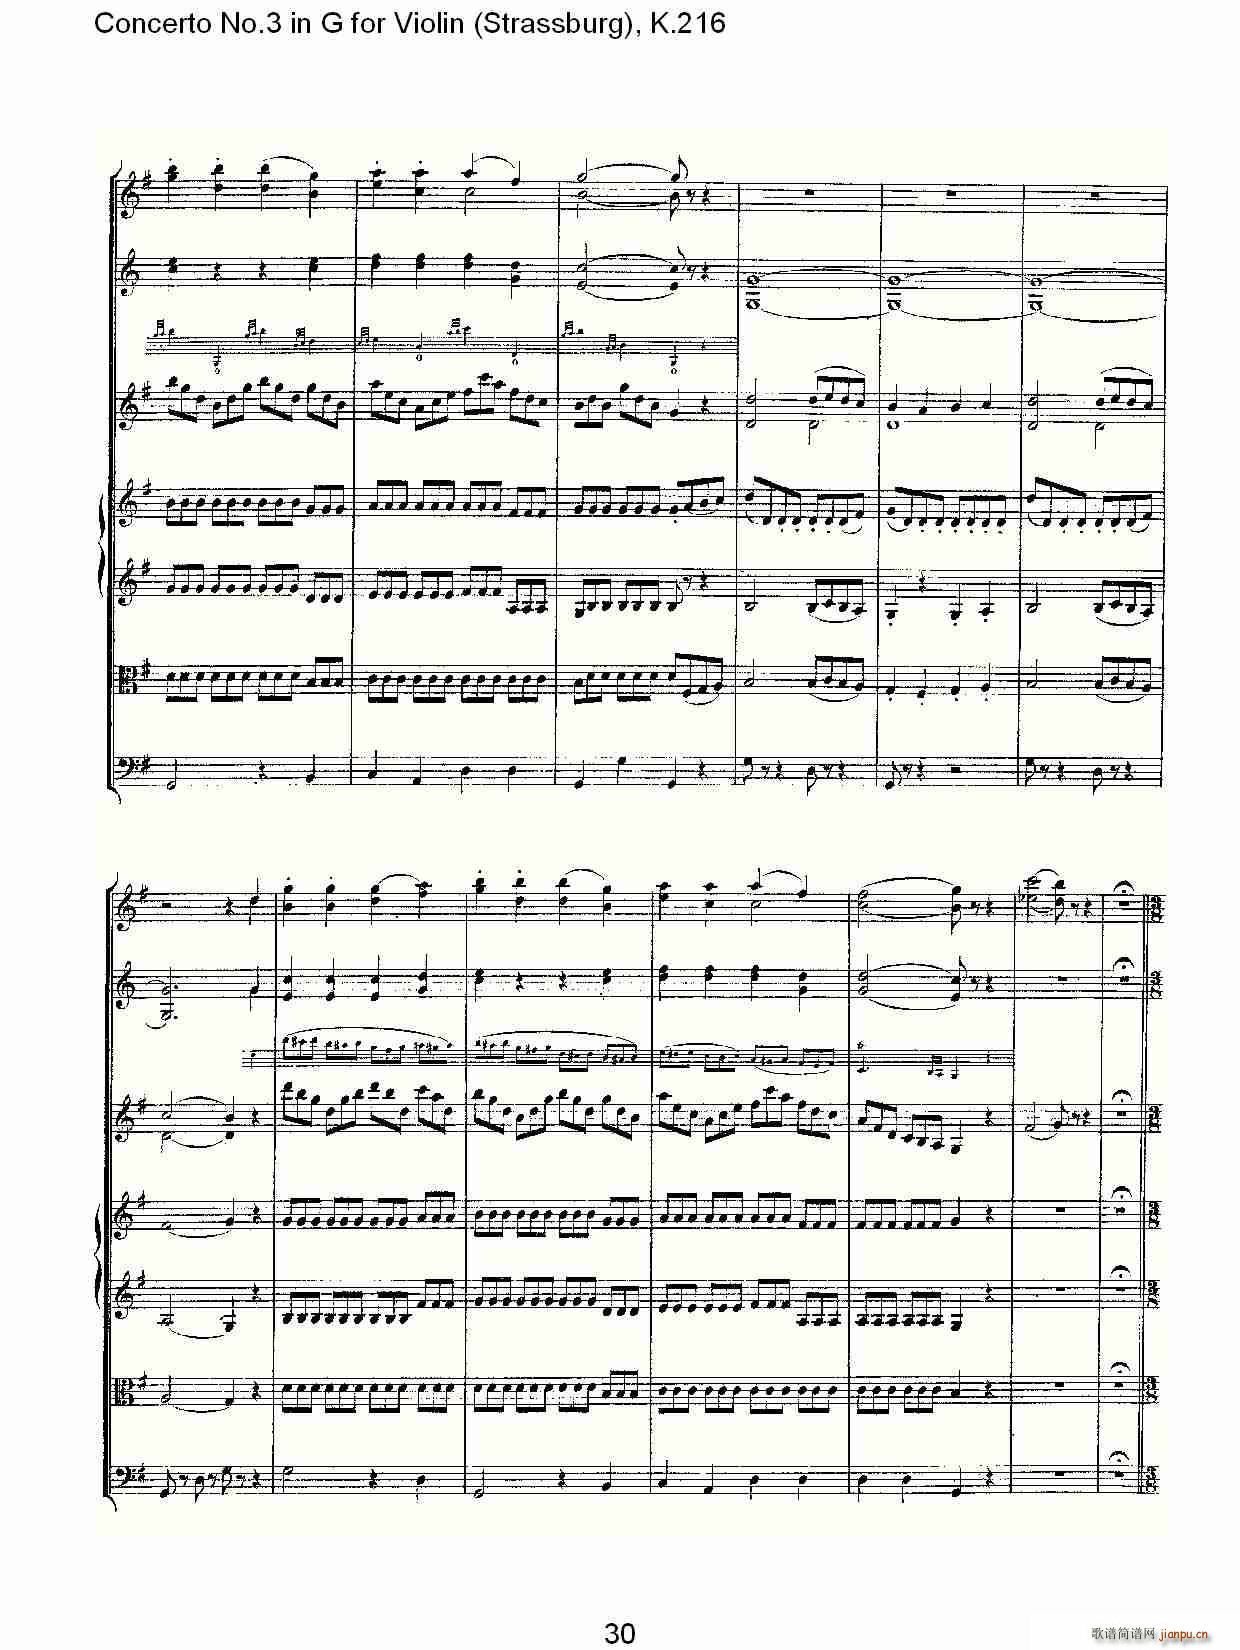 Concerto No.3 in G for Violin K.216(С)30